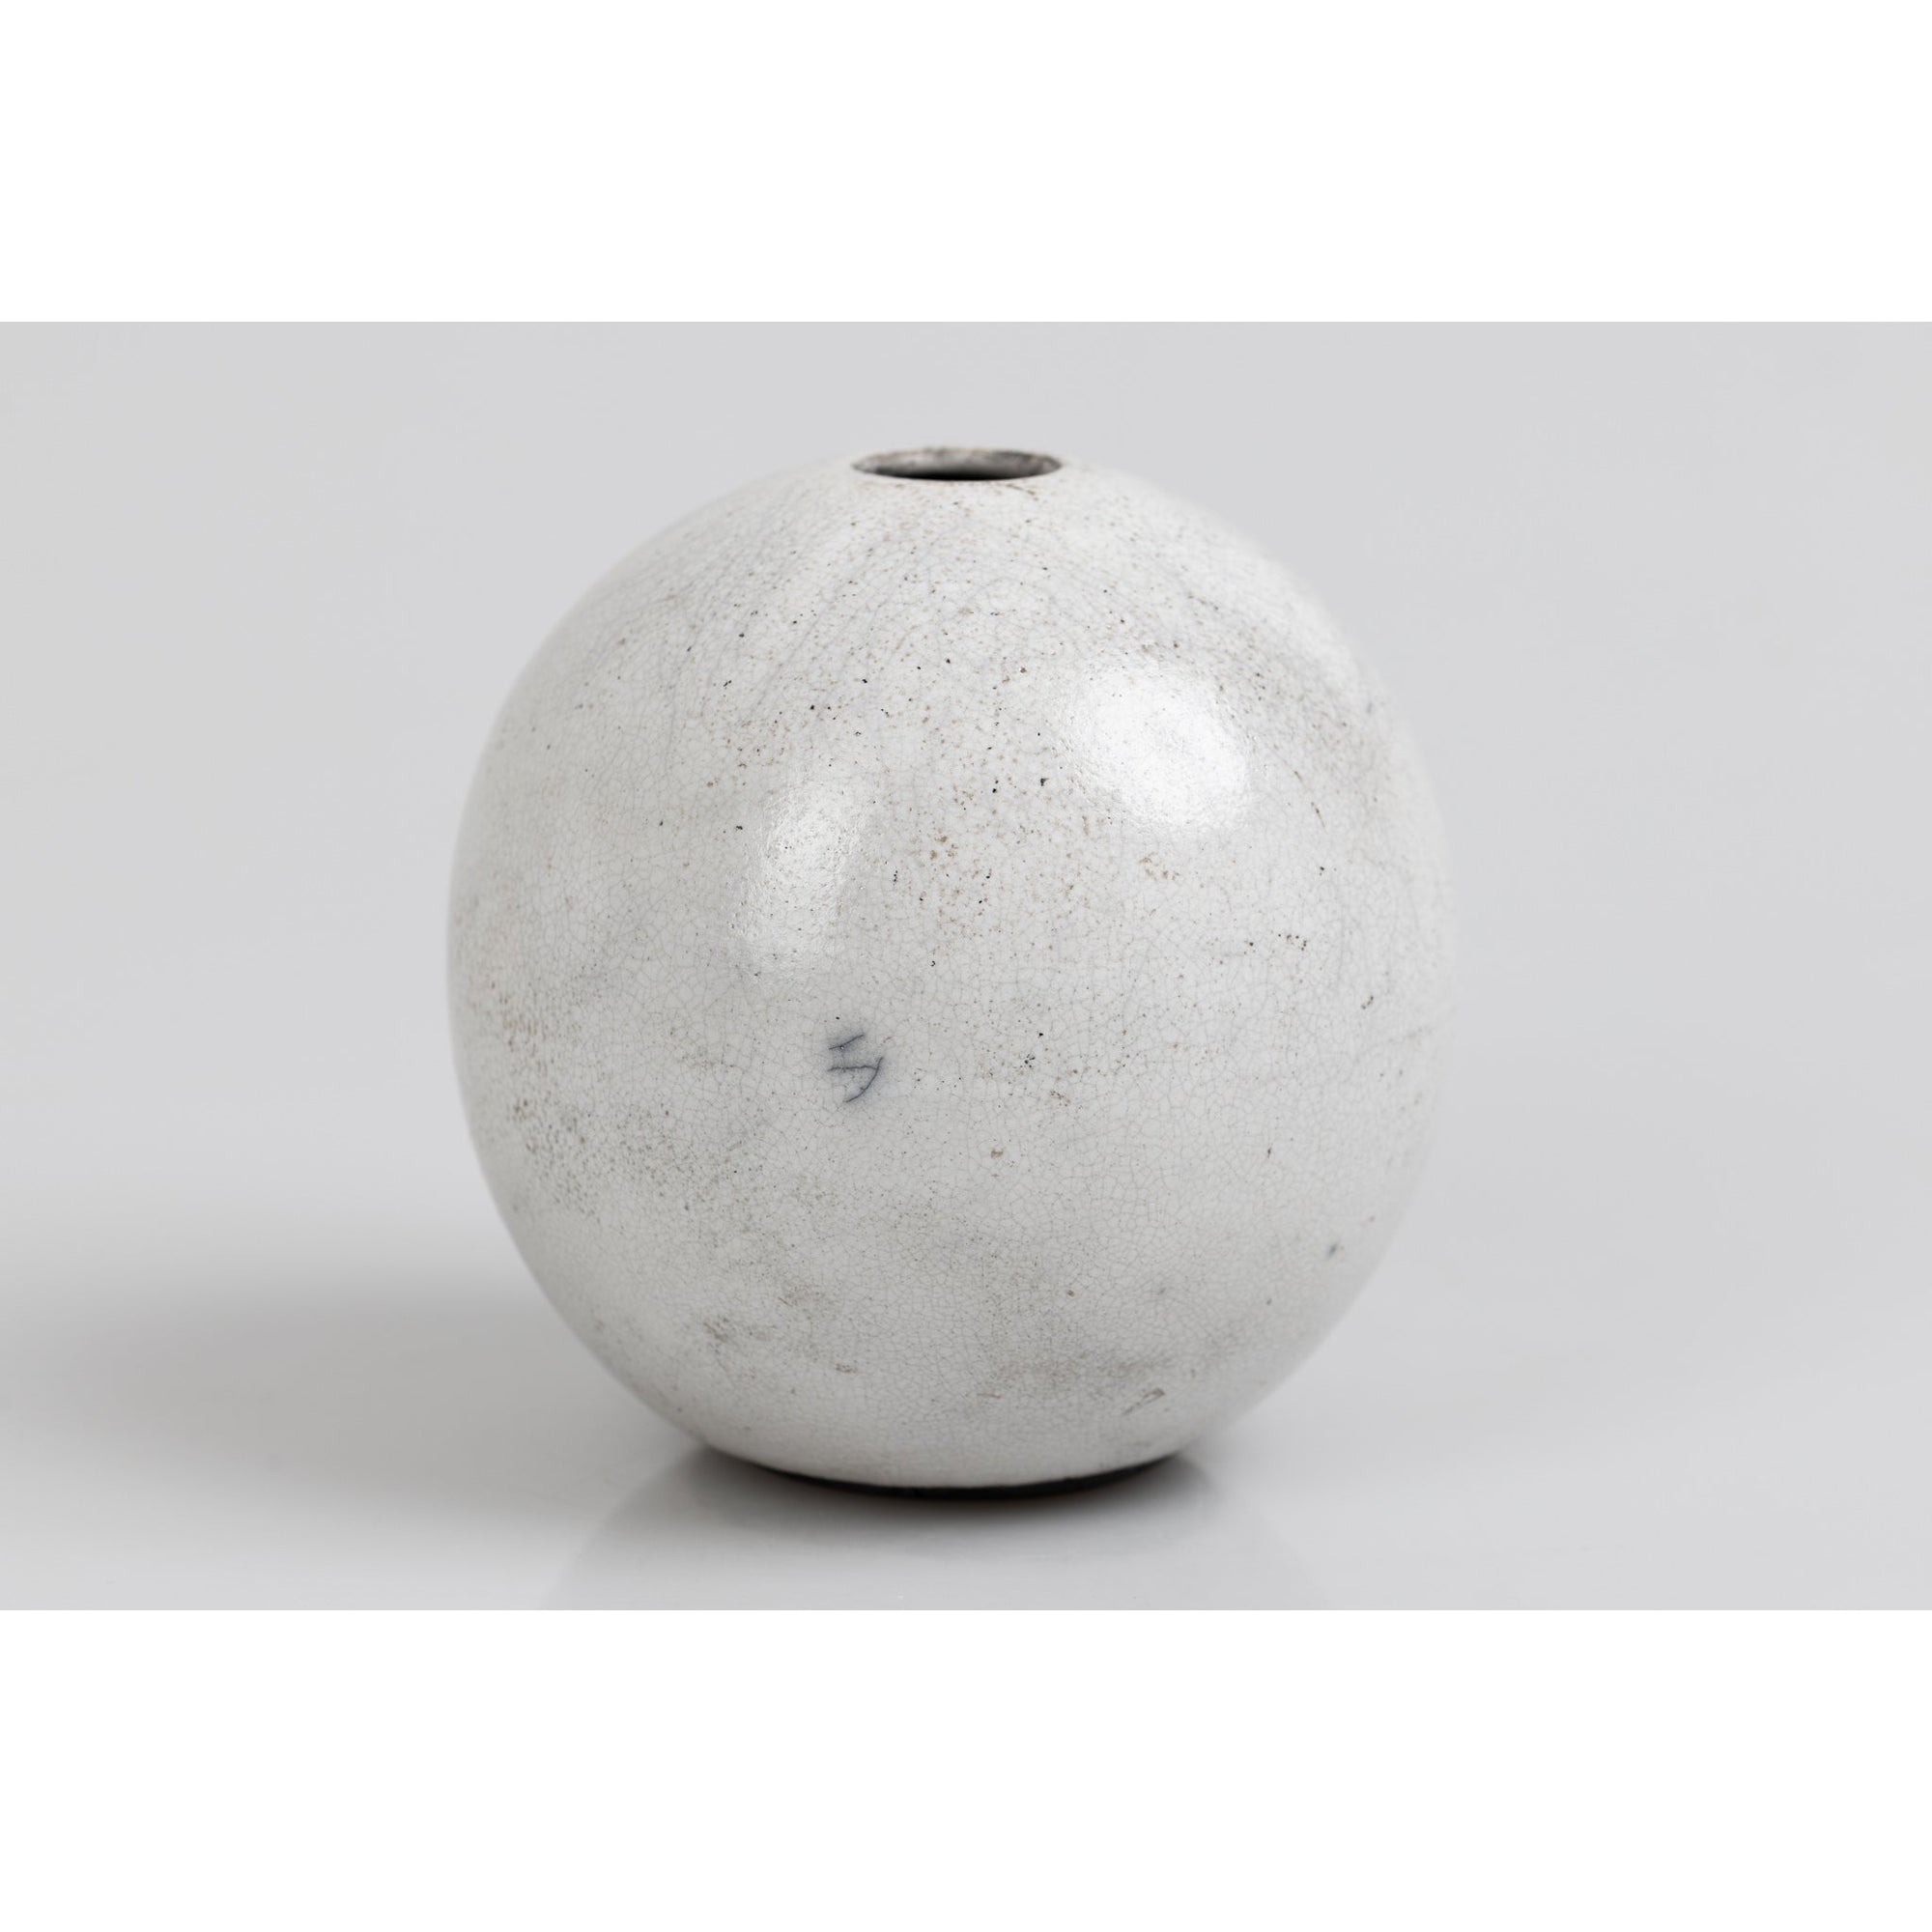 KSU2 Lunar, Raku Vase by Kate Schuricht, available at Padstow Gallery, Cornwall